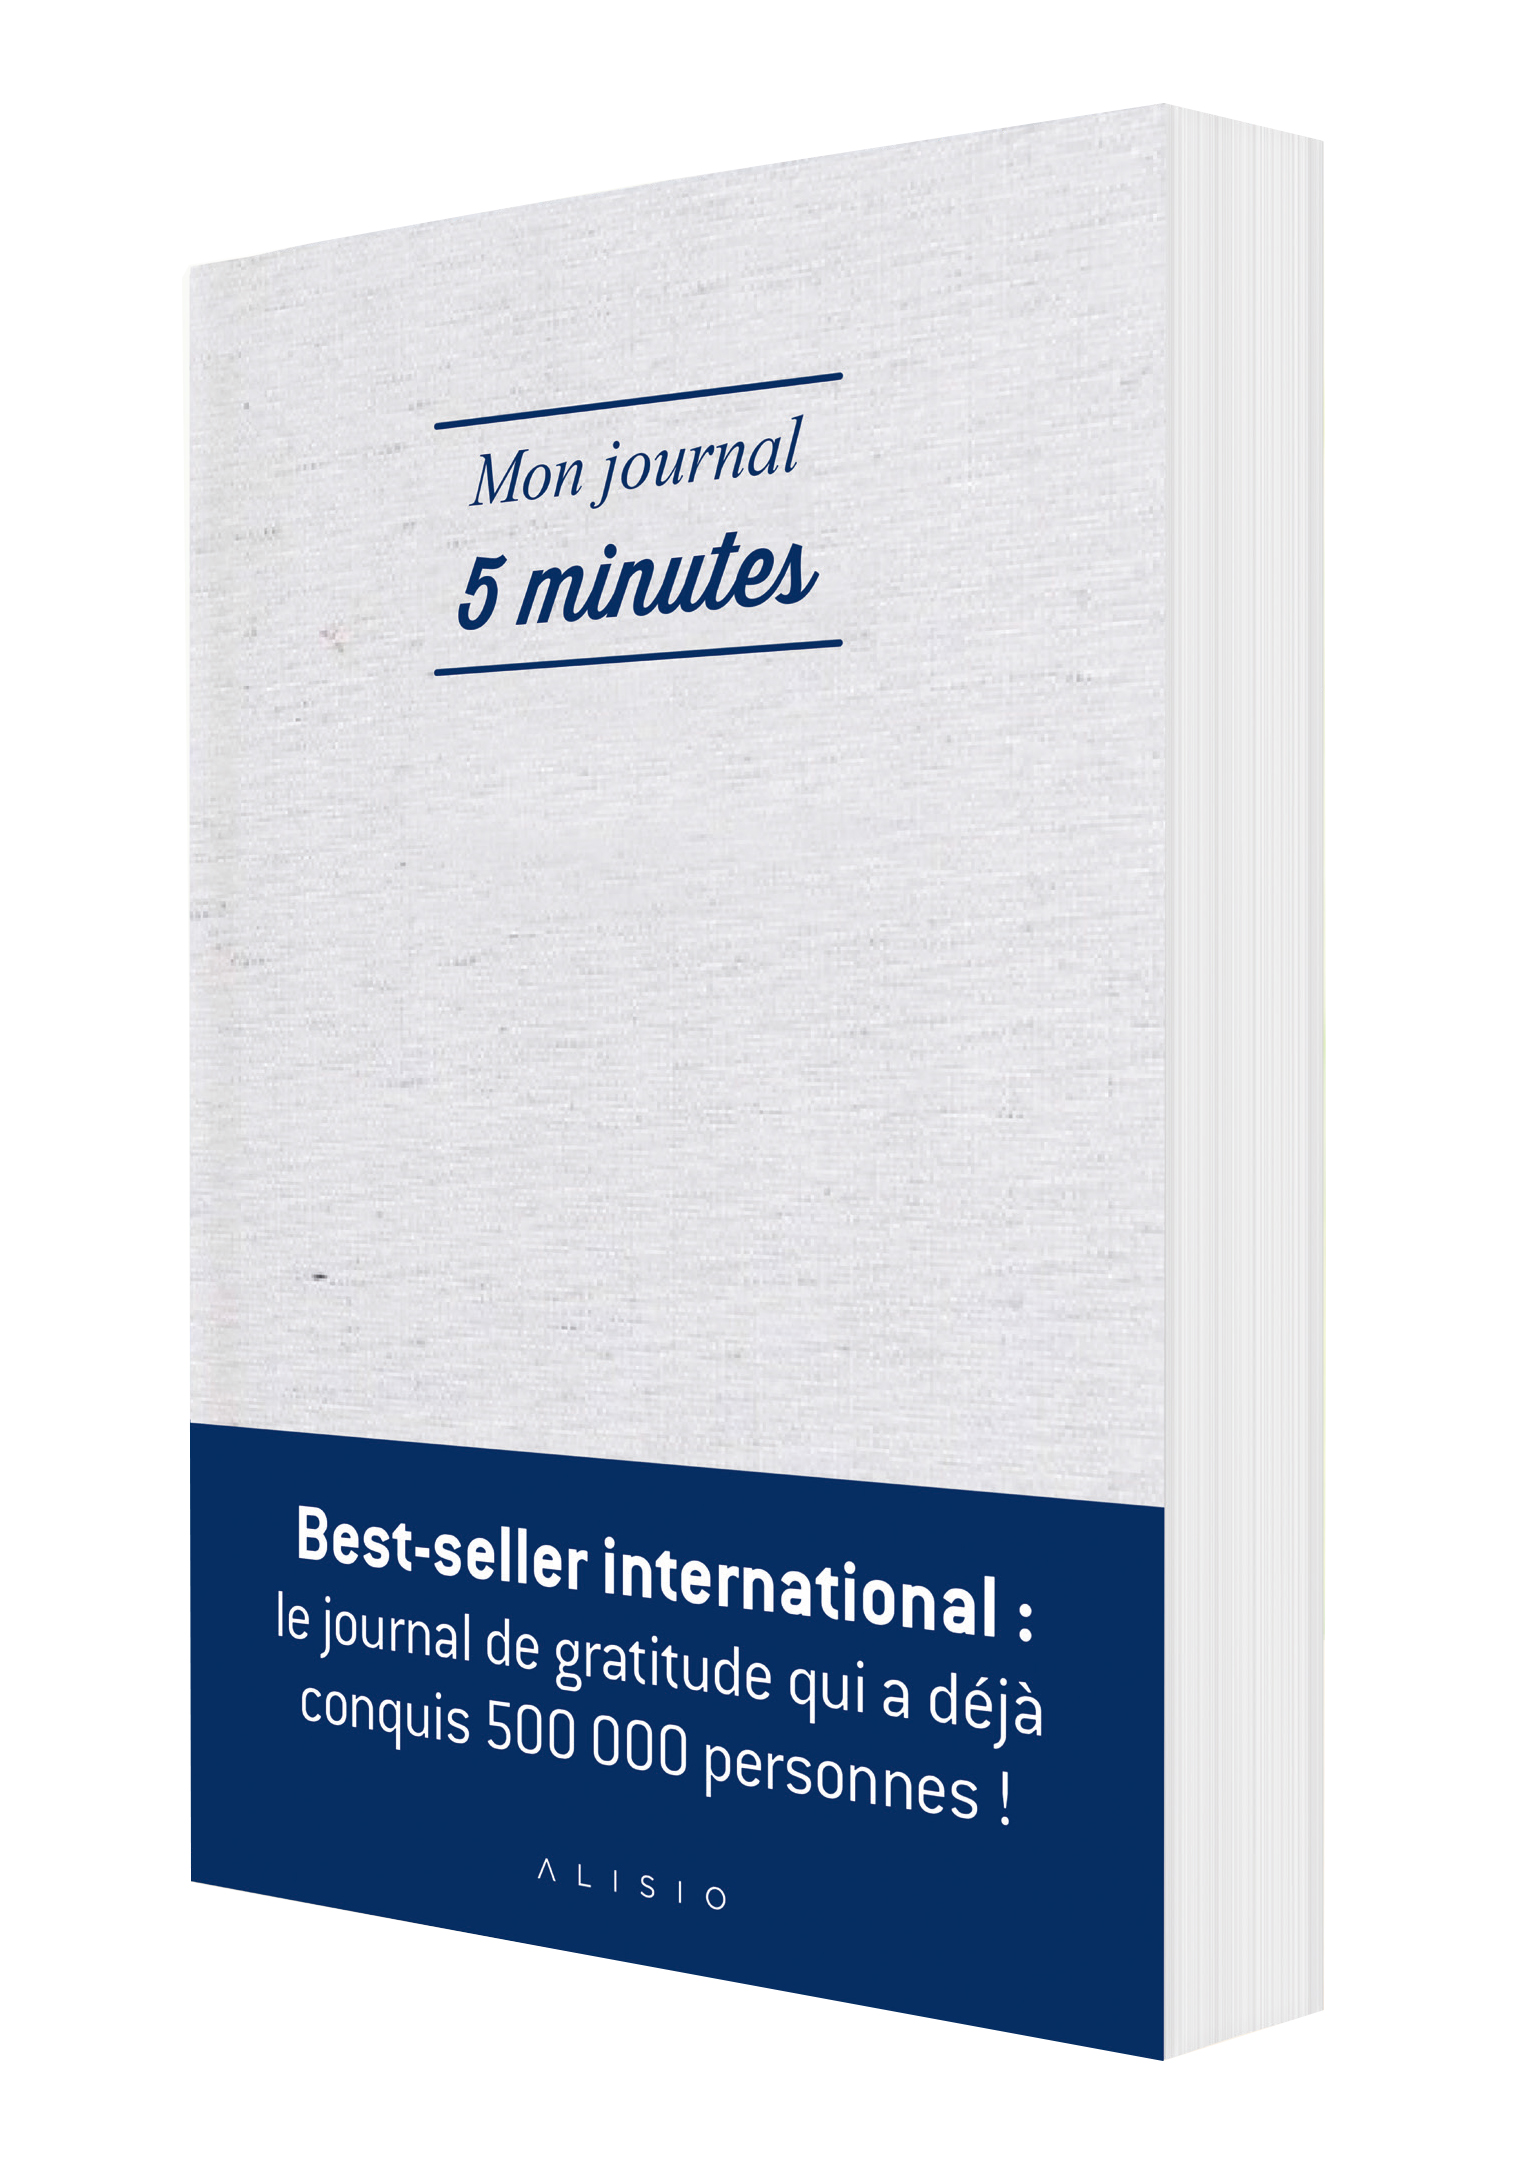 Mon journal 5 minutes - Best-seller international : le journal de